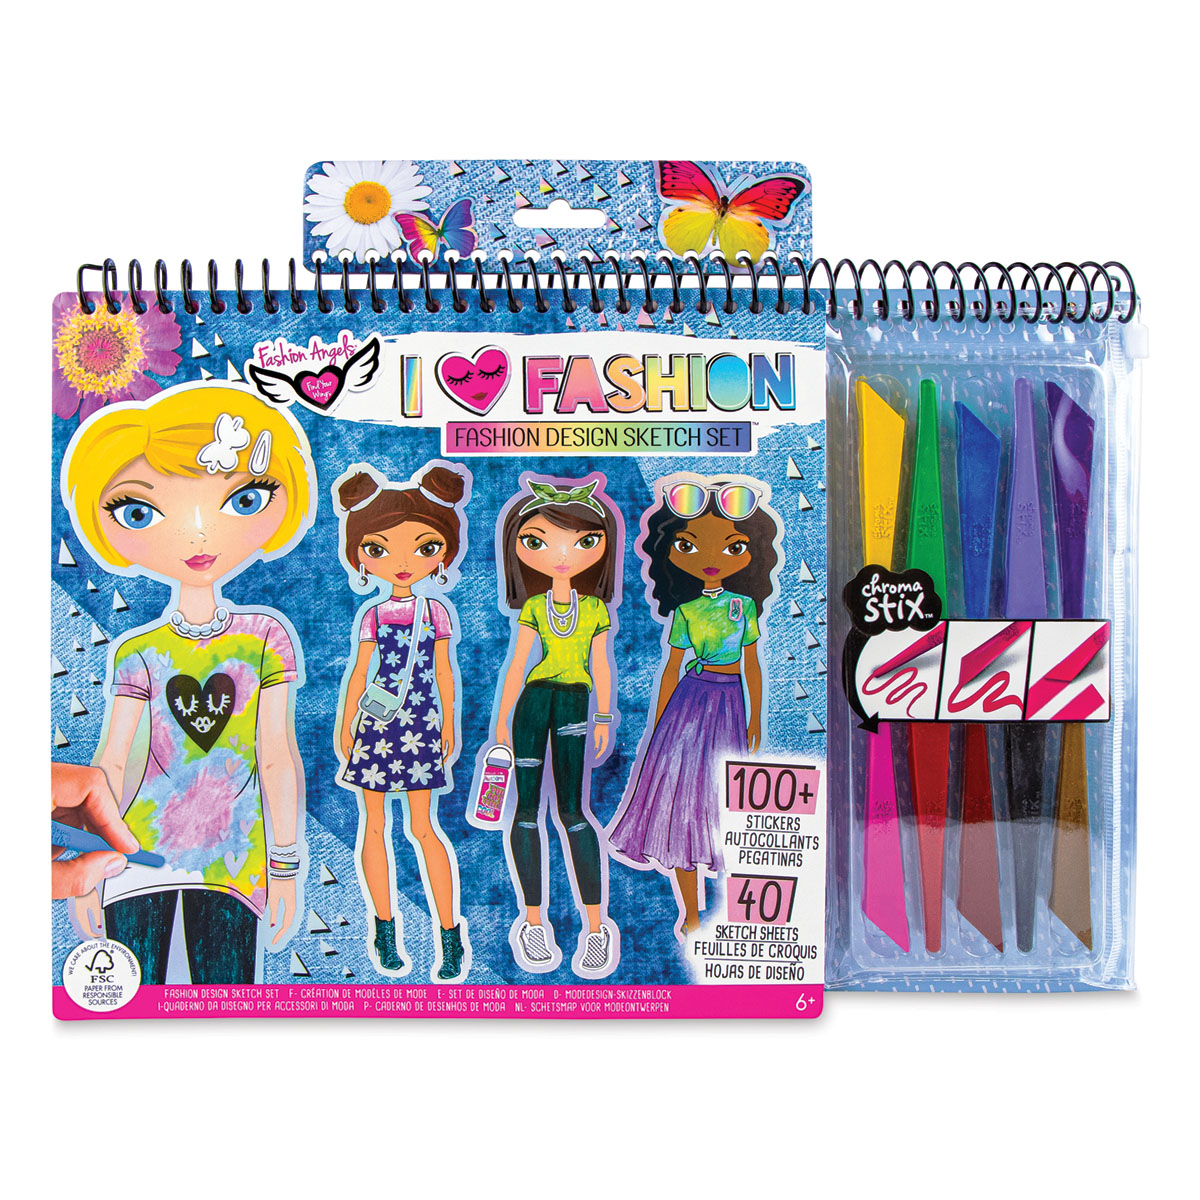 Fashion Design Mini Sketch Book by Fashion Angels - Walmart.com